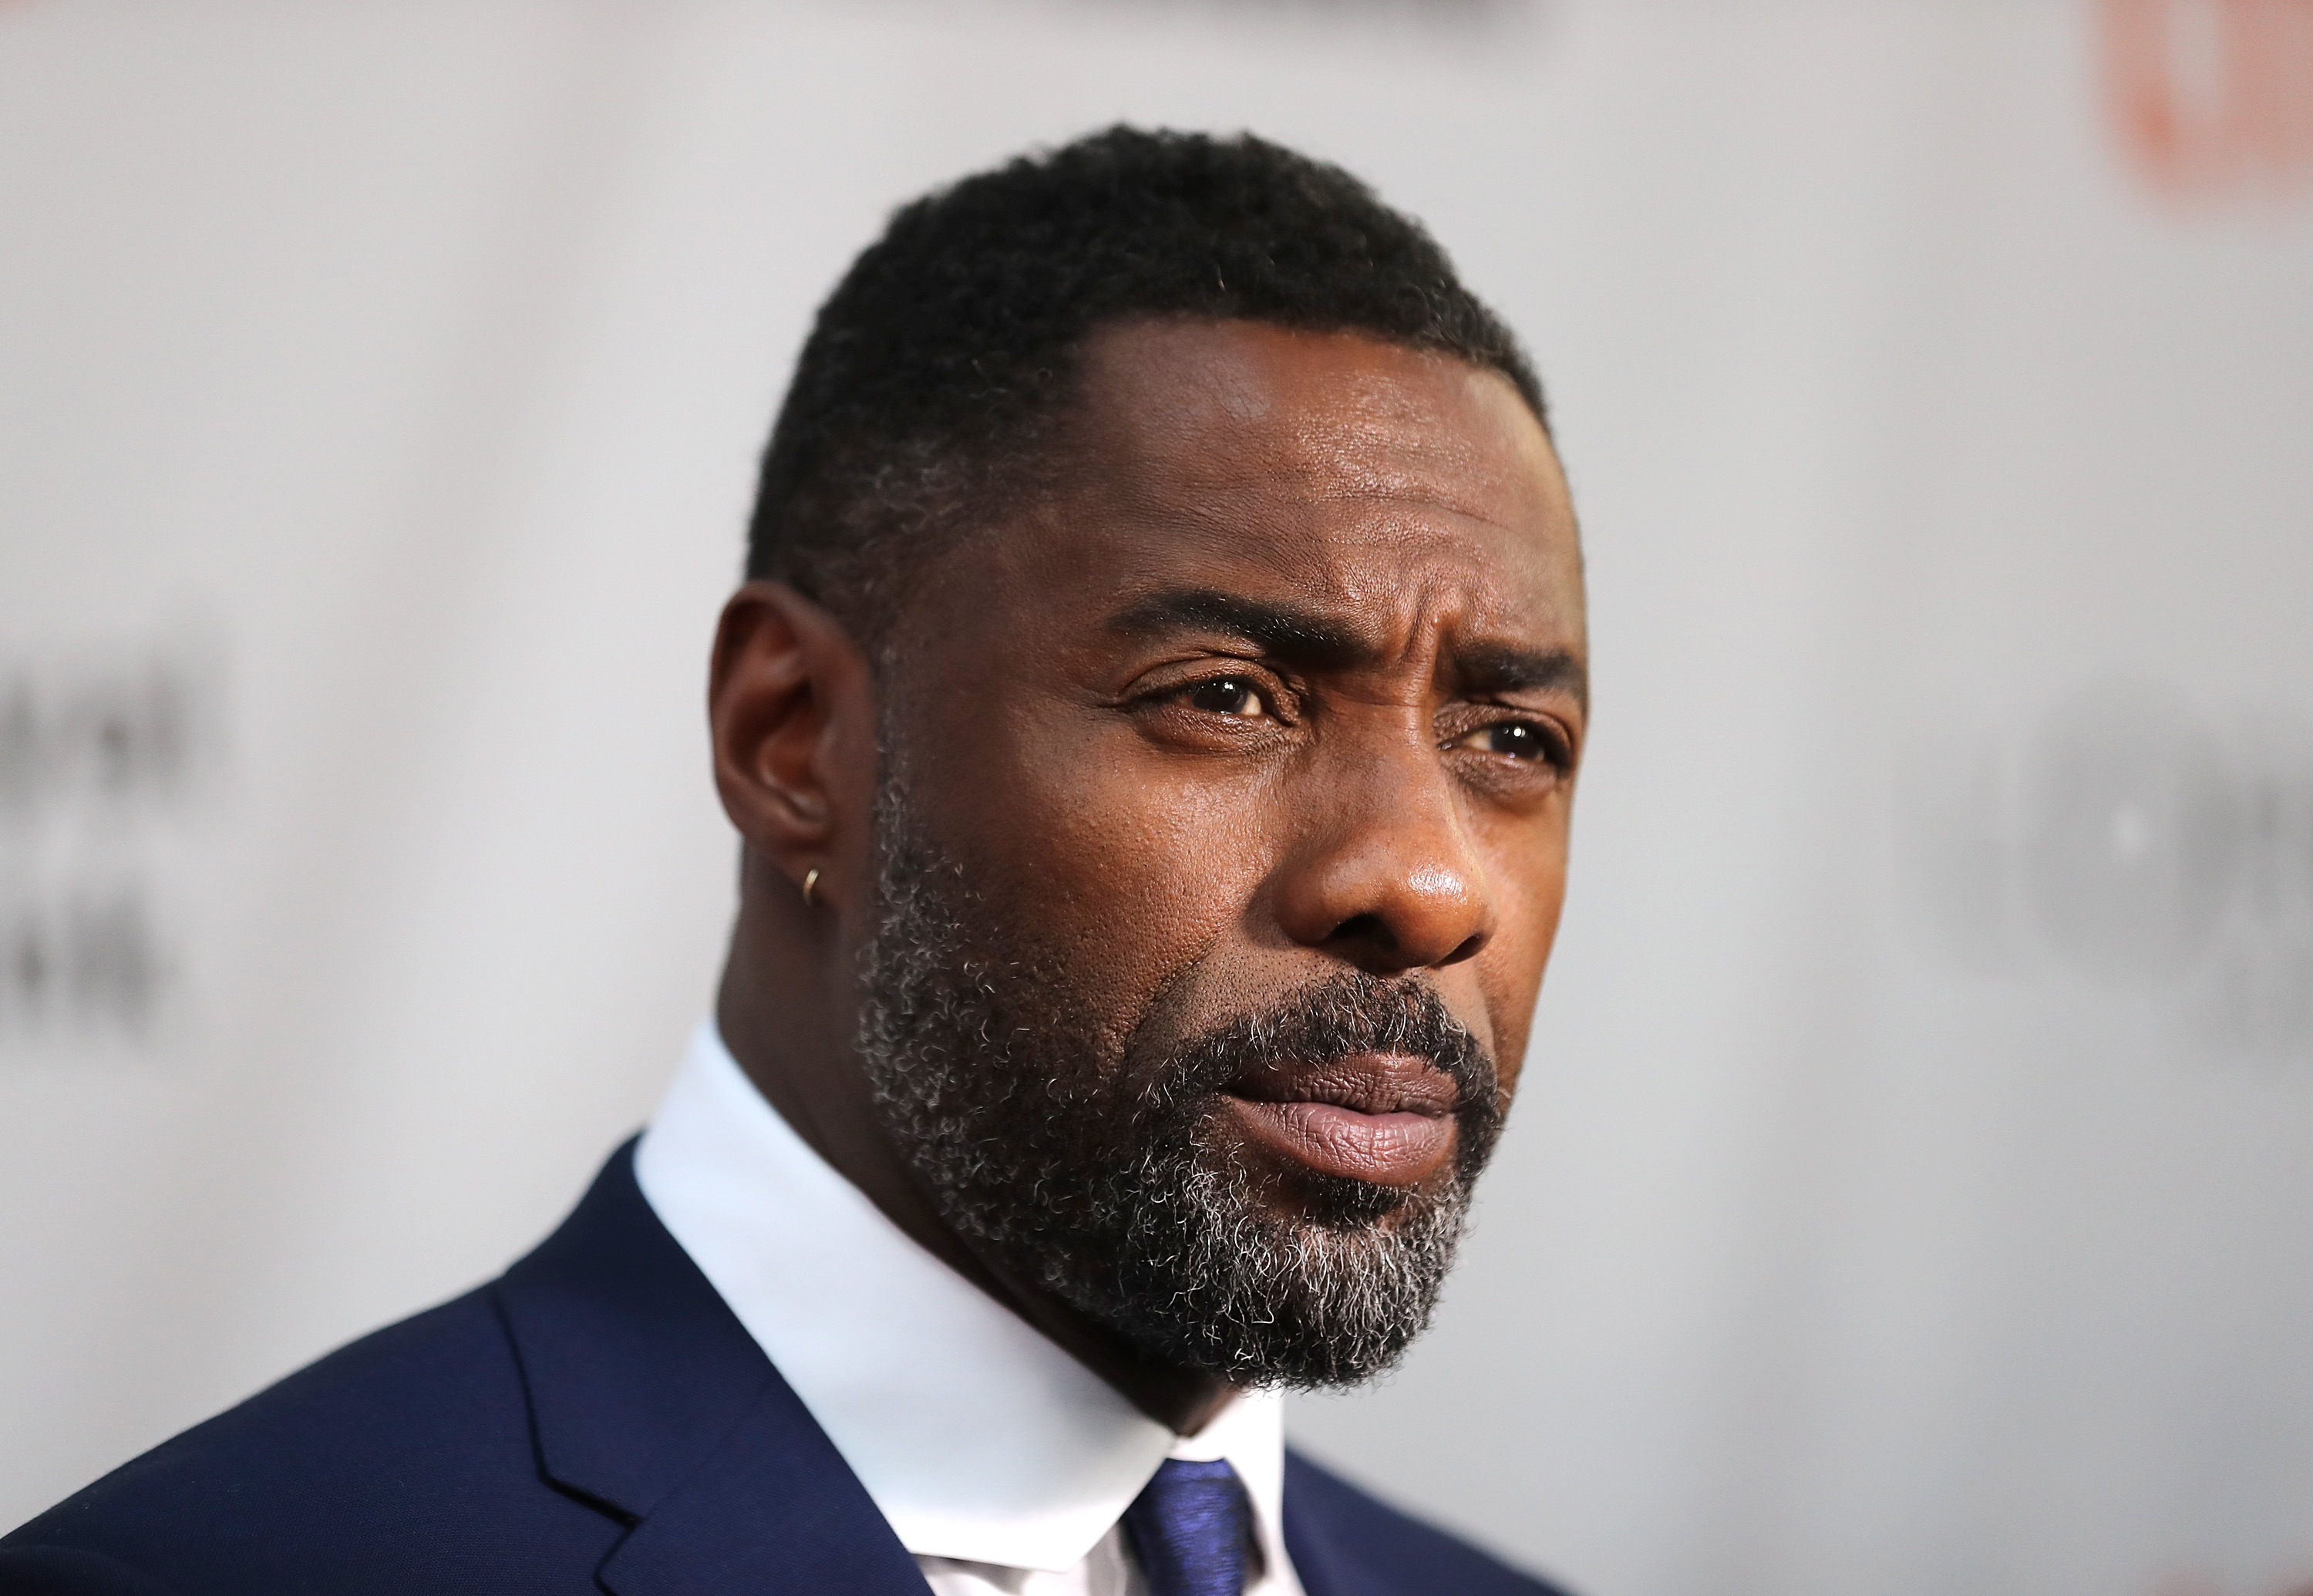 Idris Elba Add Fuel to James Bond Rumors With Cryptic Tweet